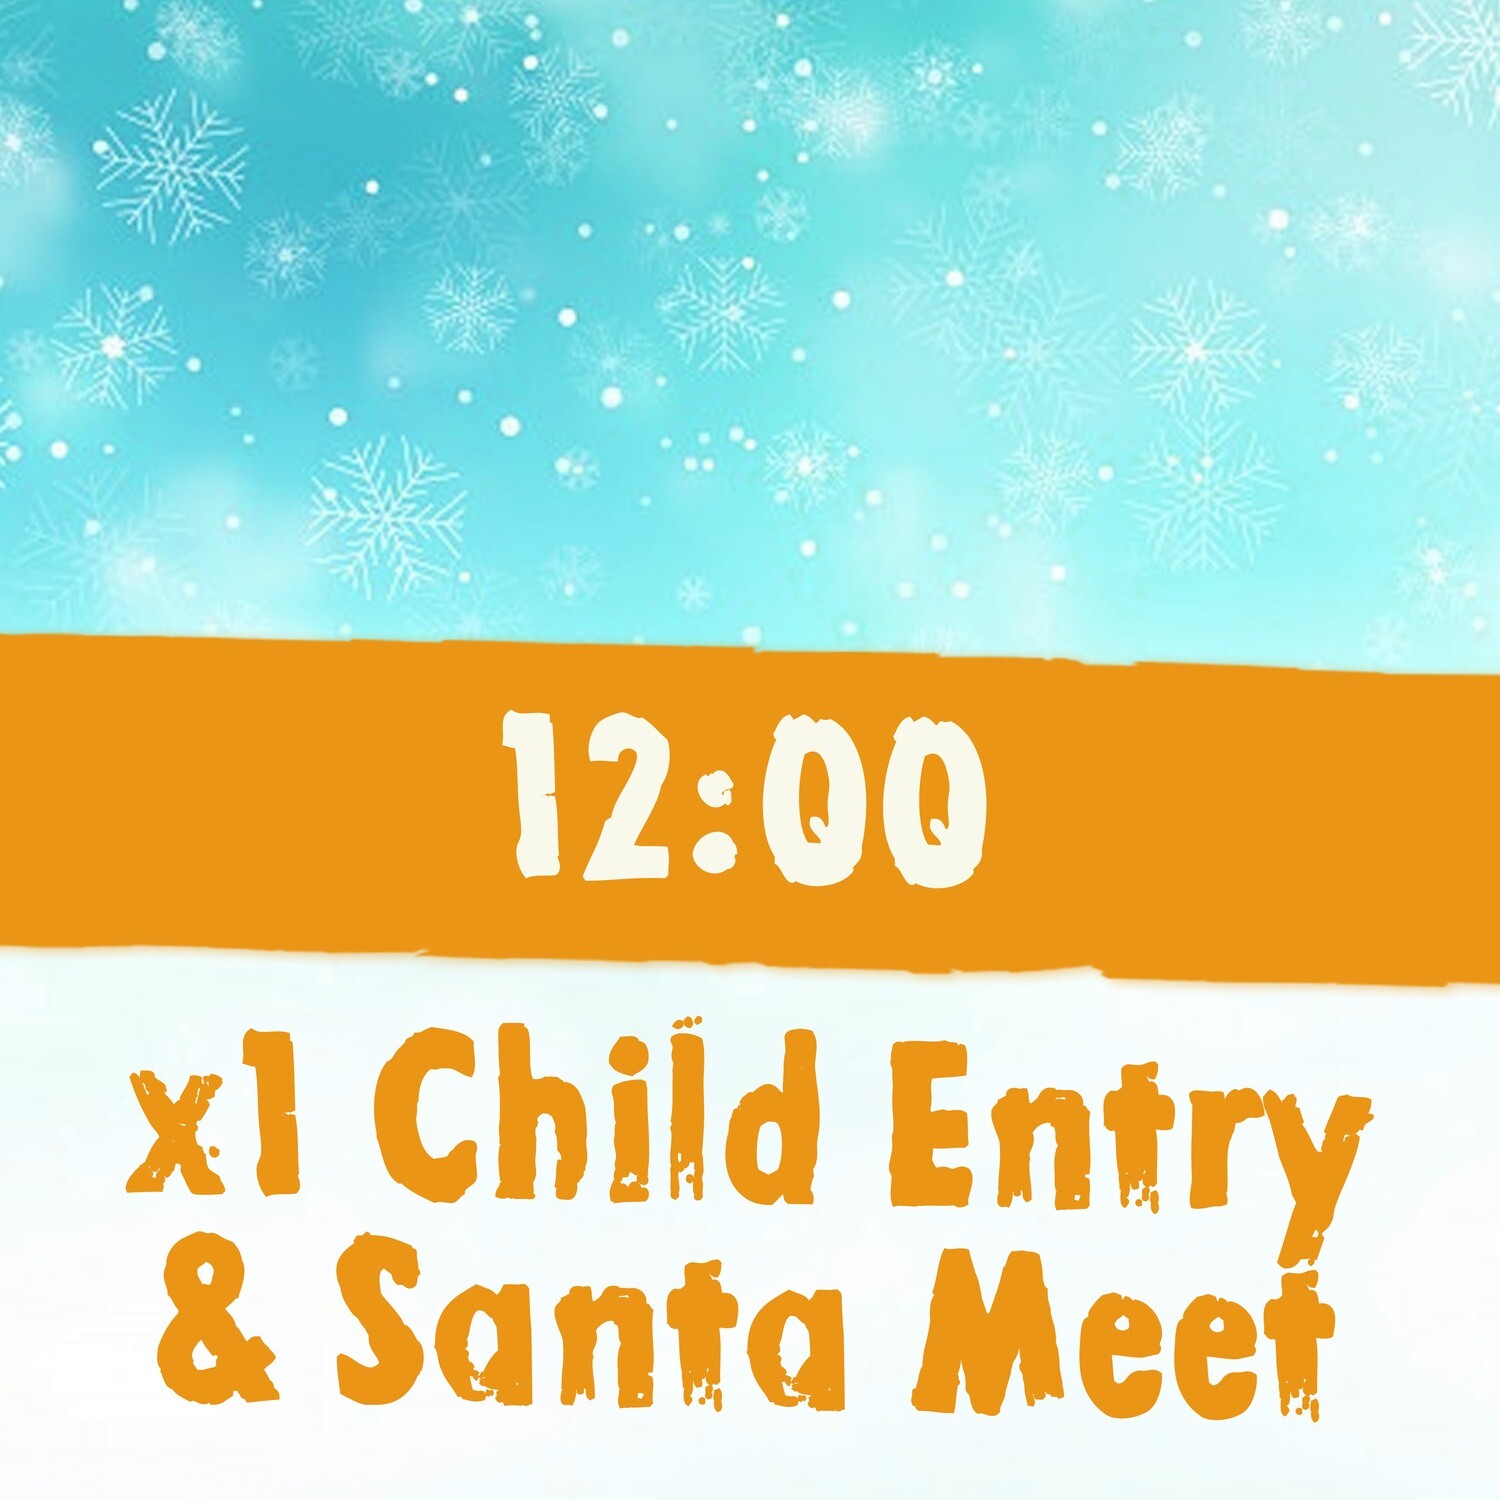 x1 Child Admission + Santa Meet 16th Dec / 12:00